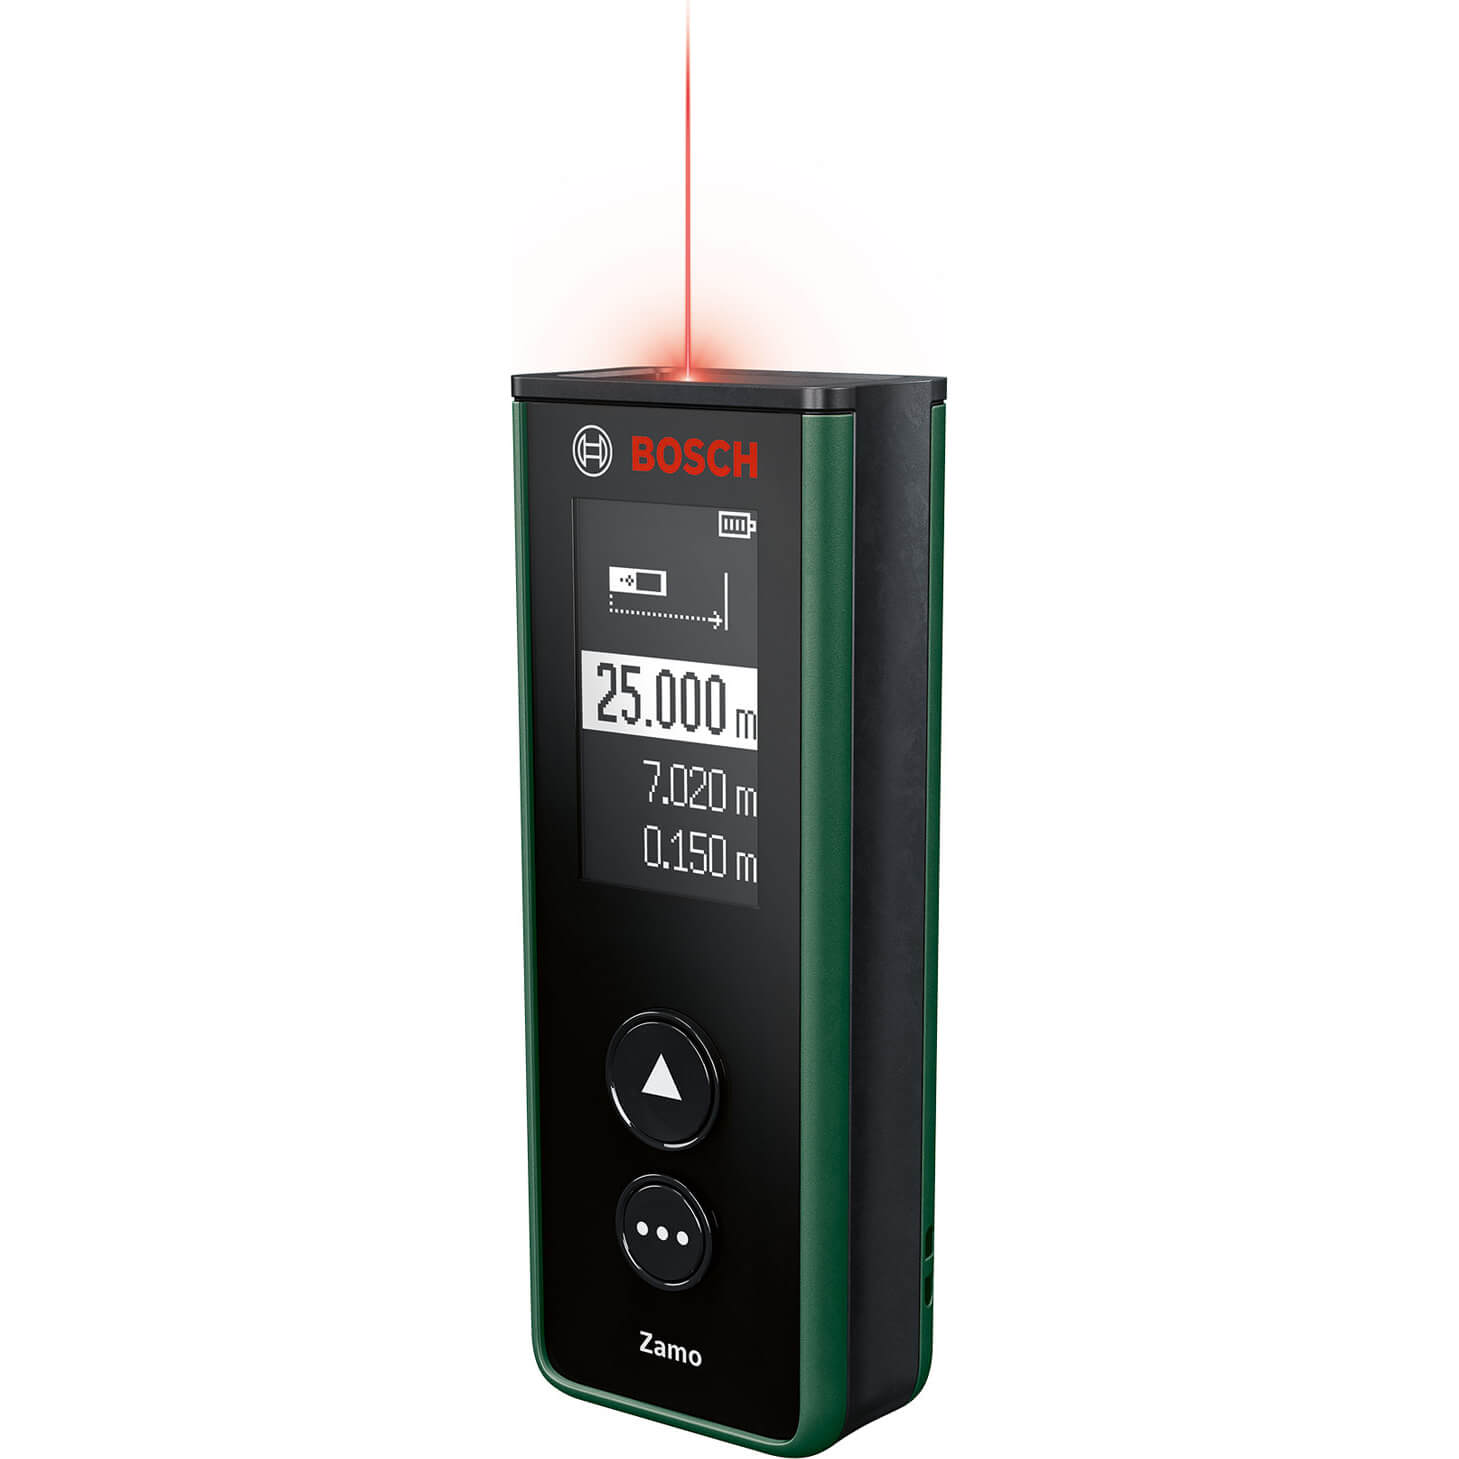 Bosch Home and Garden Bosch ZAMO 4 Laser Distance Measure and Area Calculator 25m